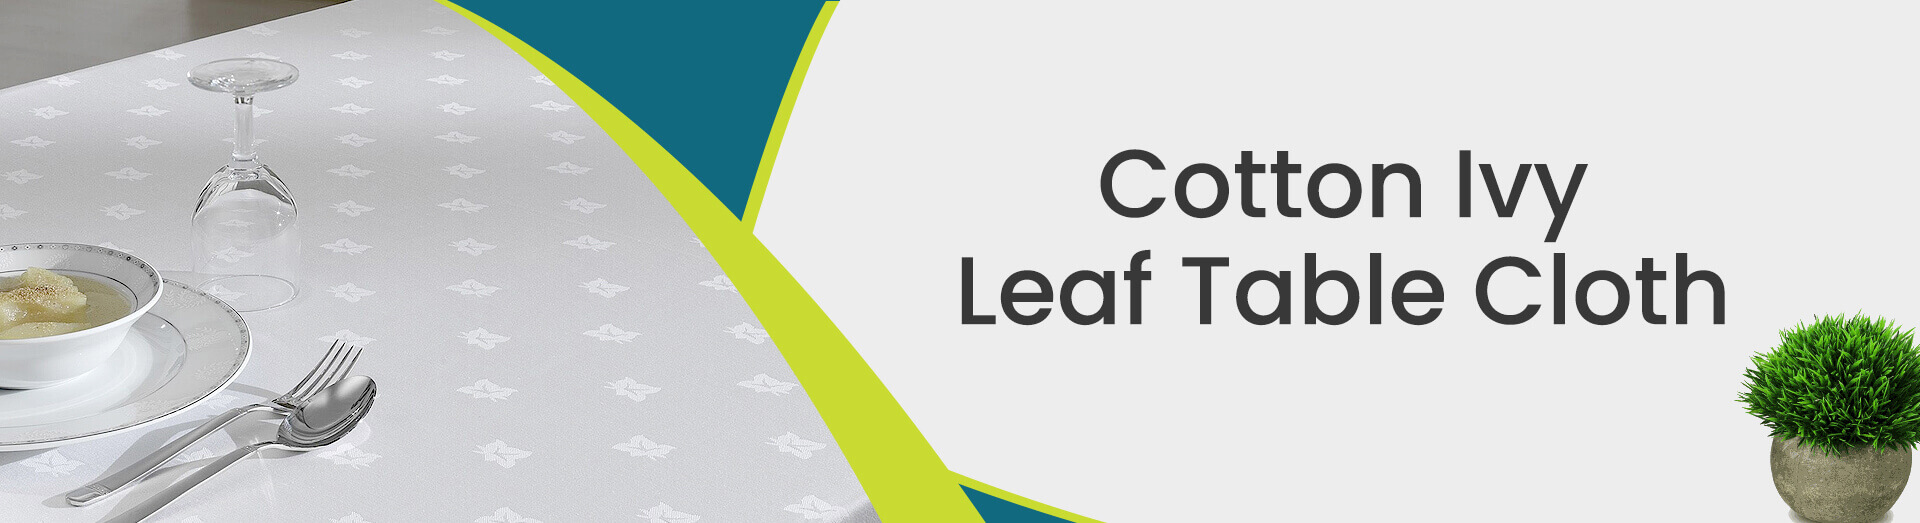 100% Cotton Cotton Ivy Leaf Napkin